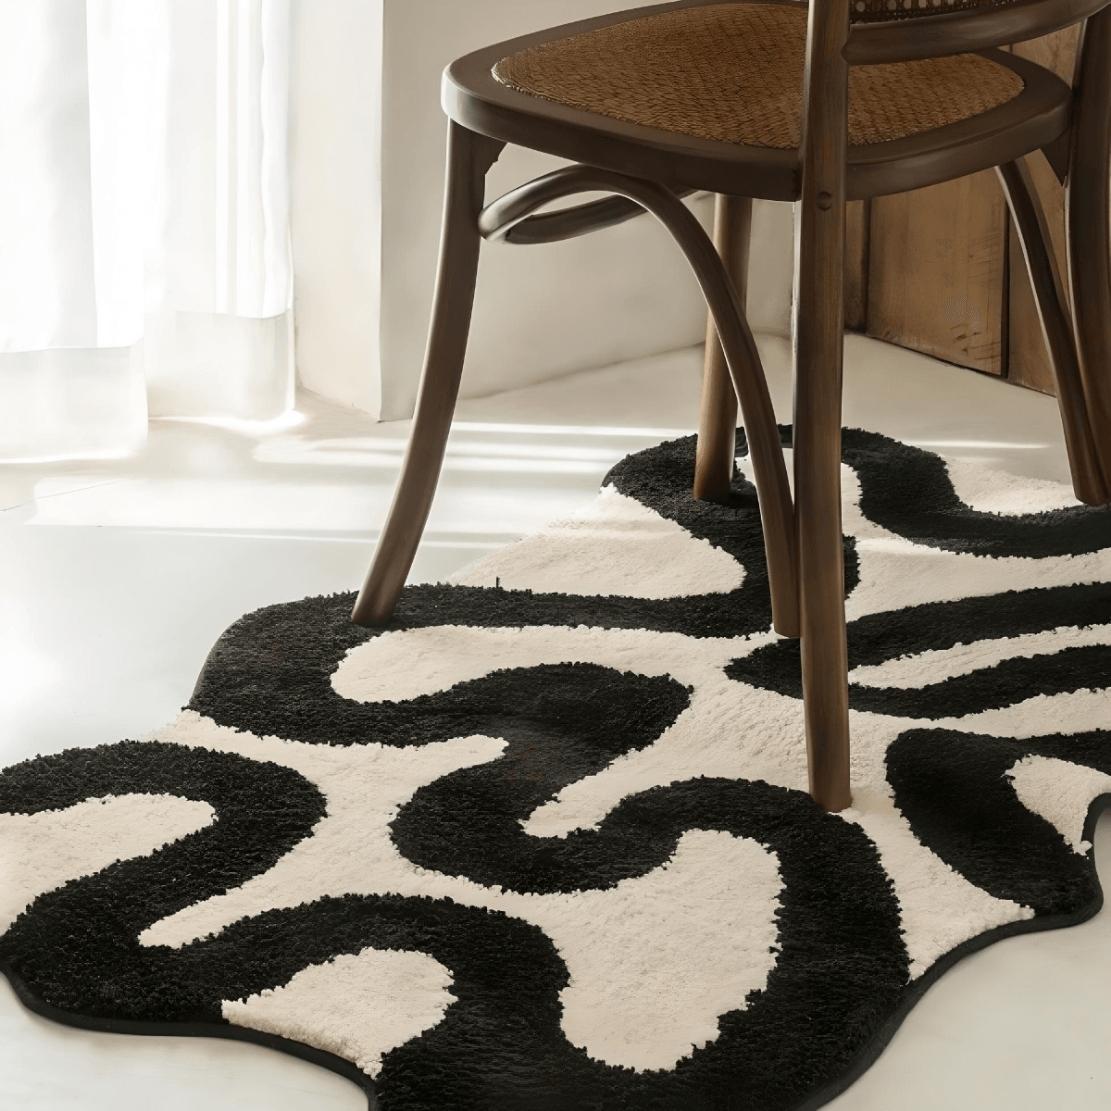 Asymmetrical line art floor carpet rug under wooden chair